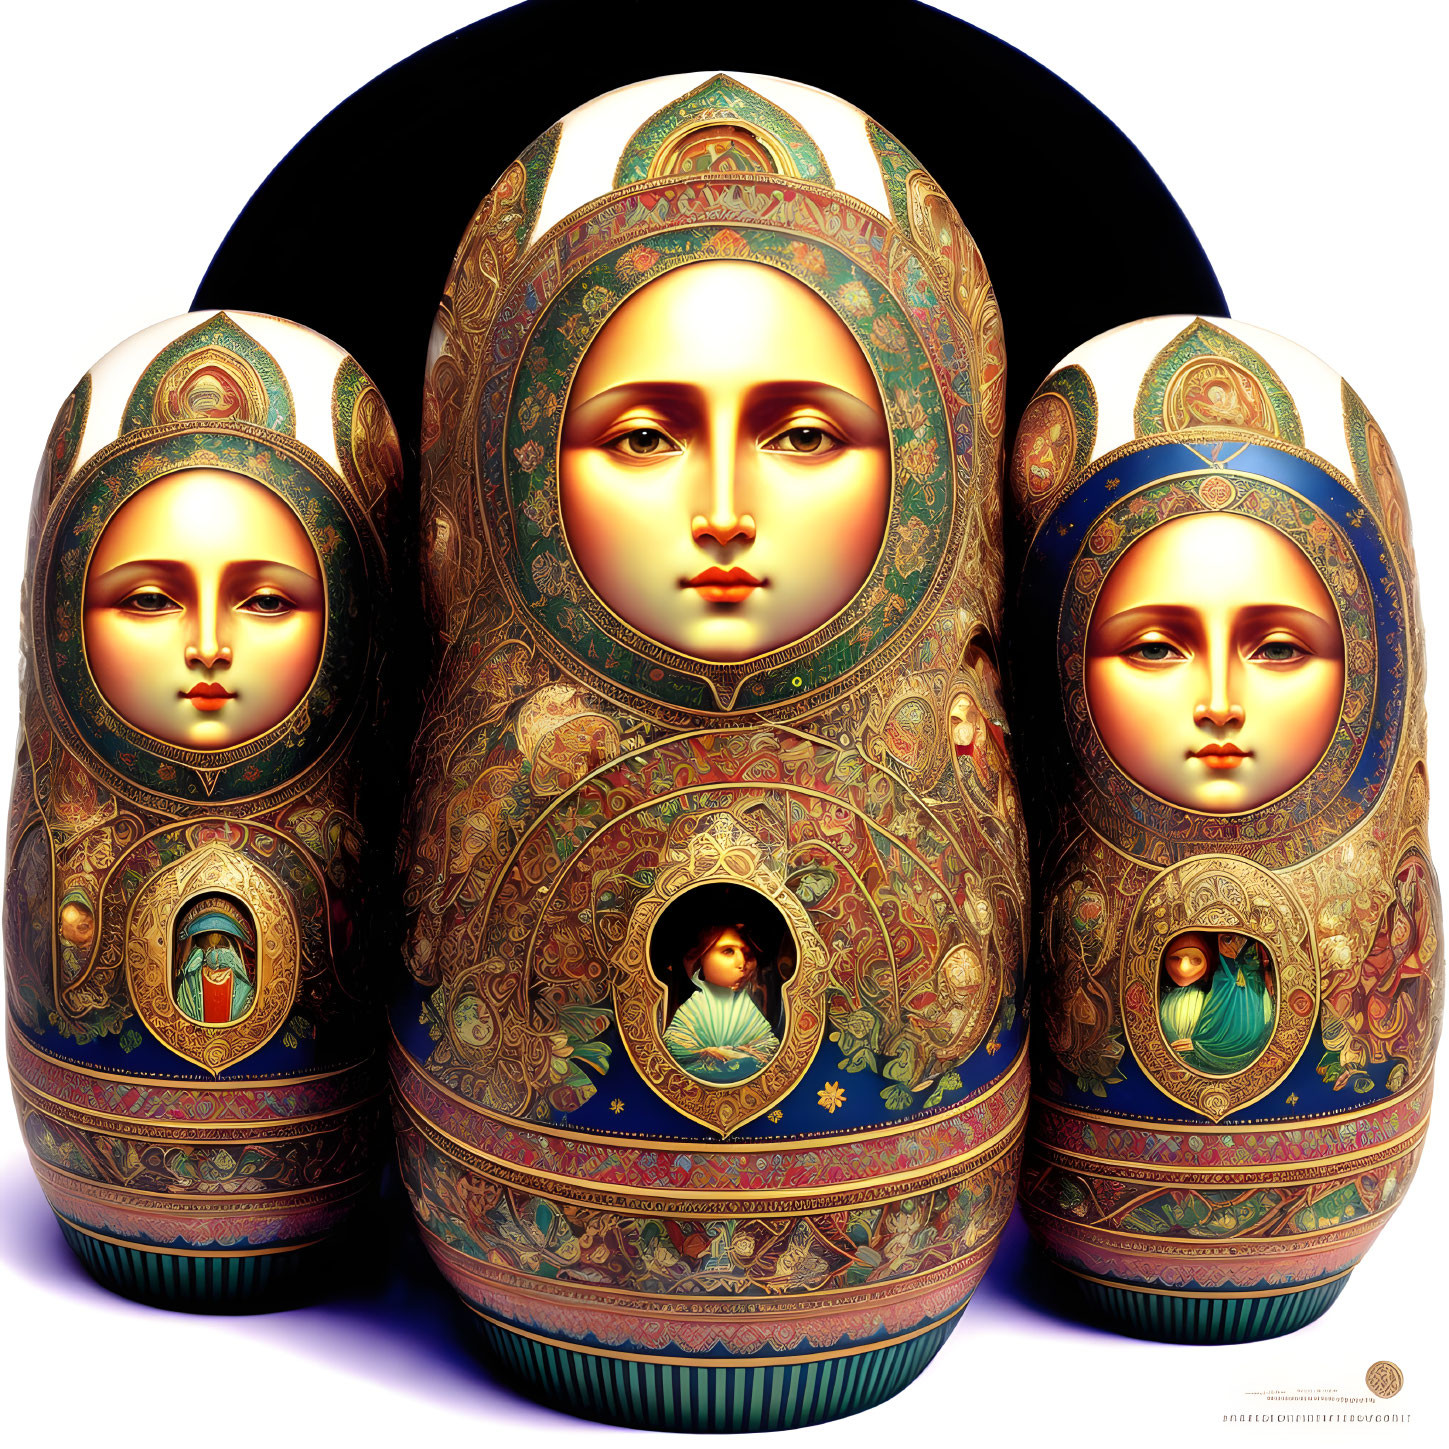 Detailed Ornate Nesting Dolls with Serene Female Faces on Black Background